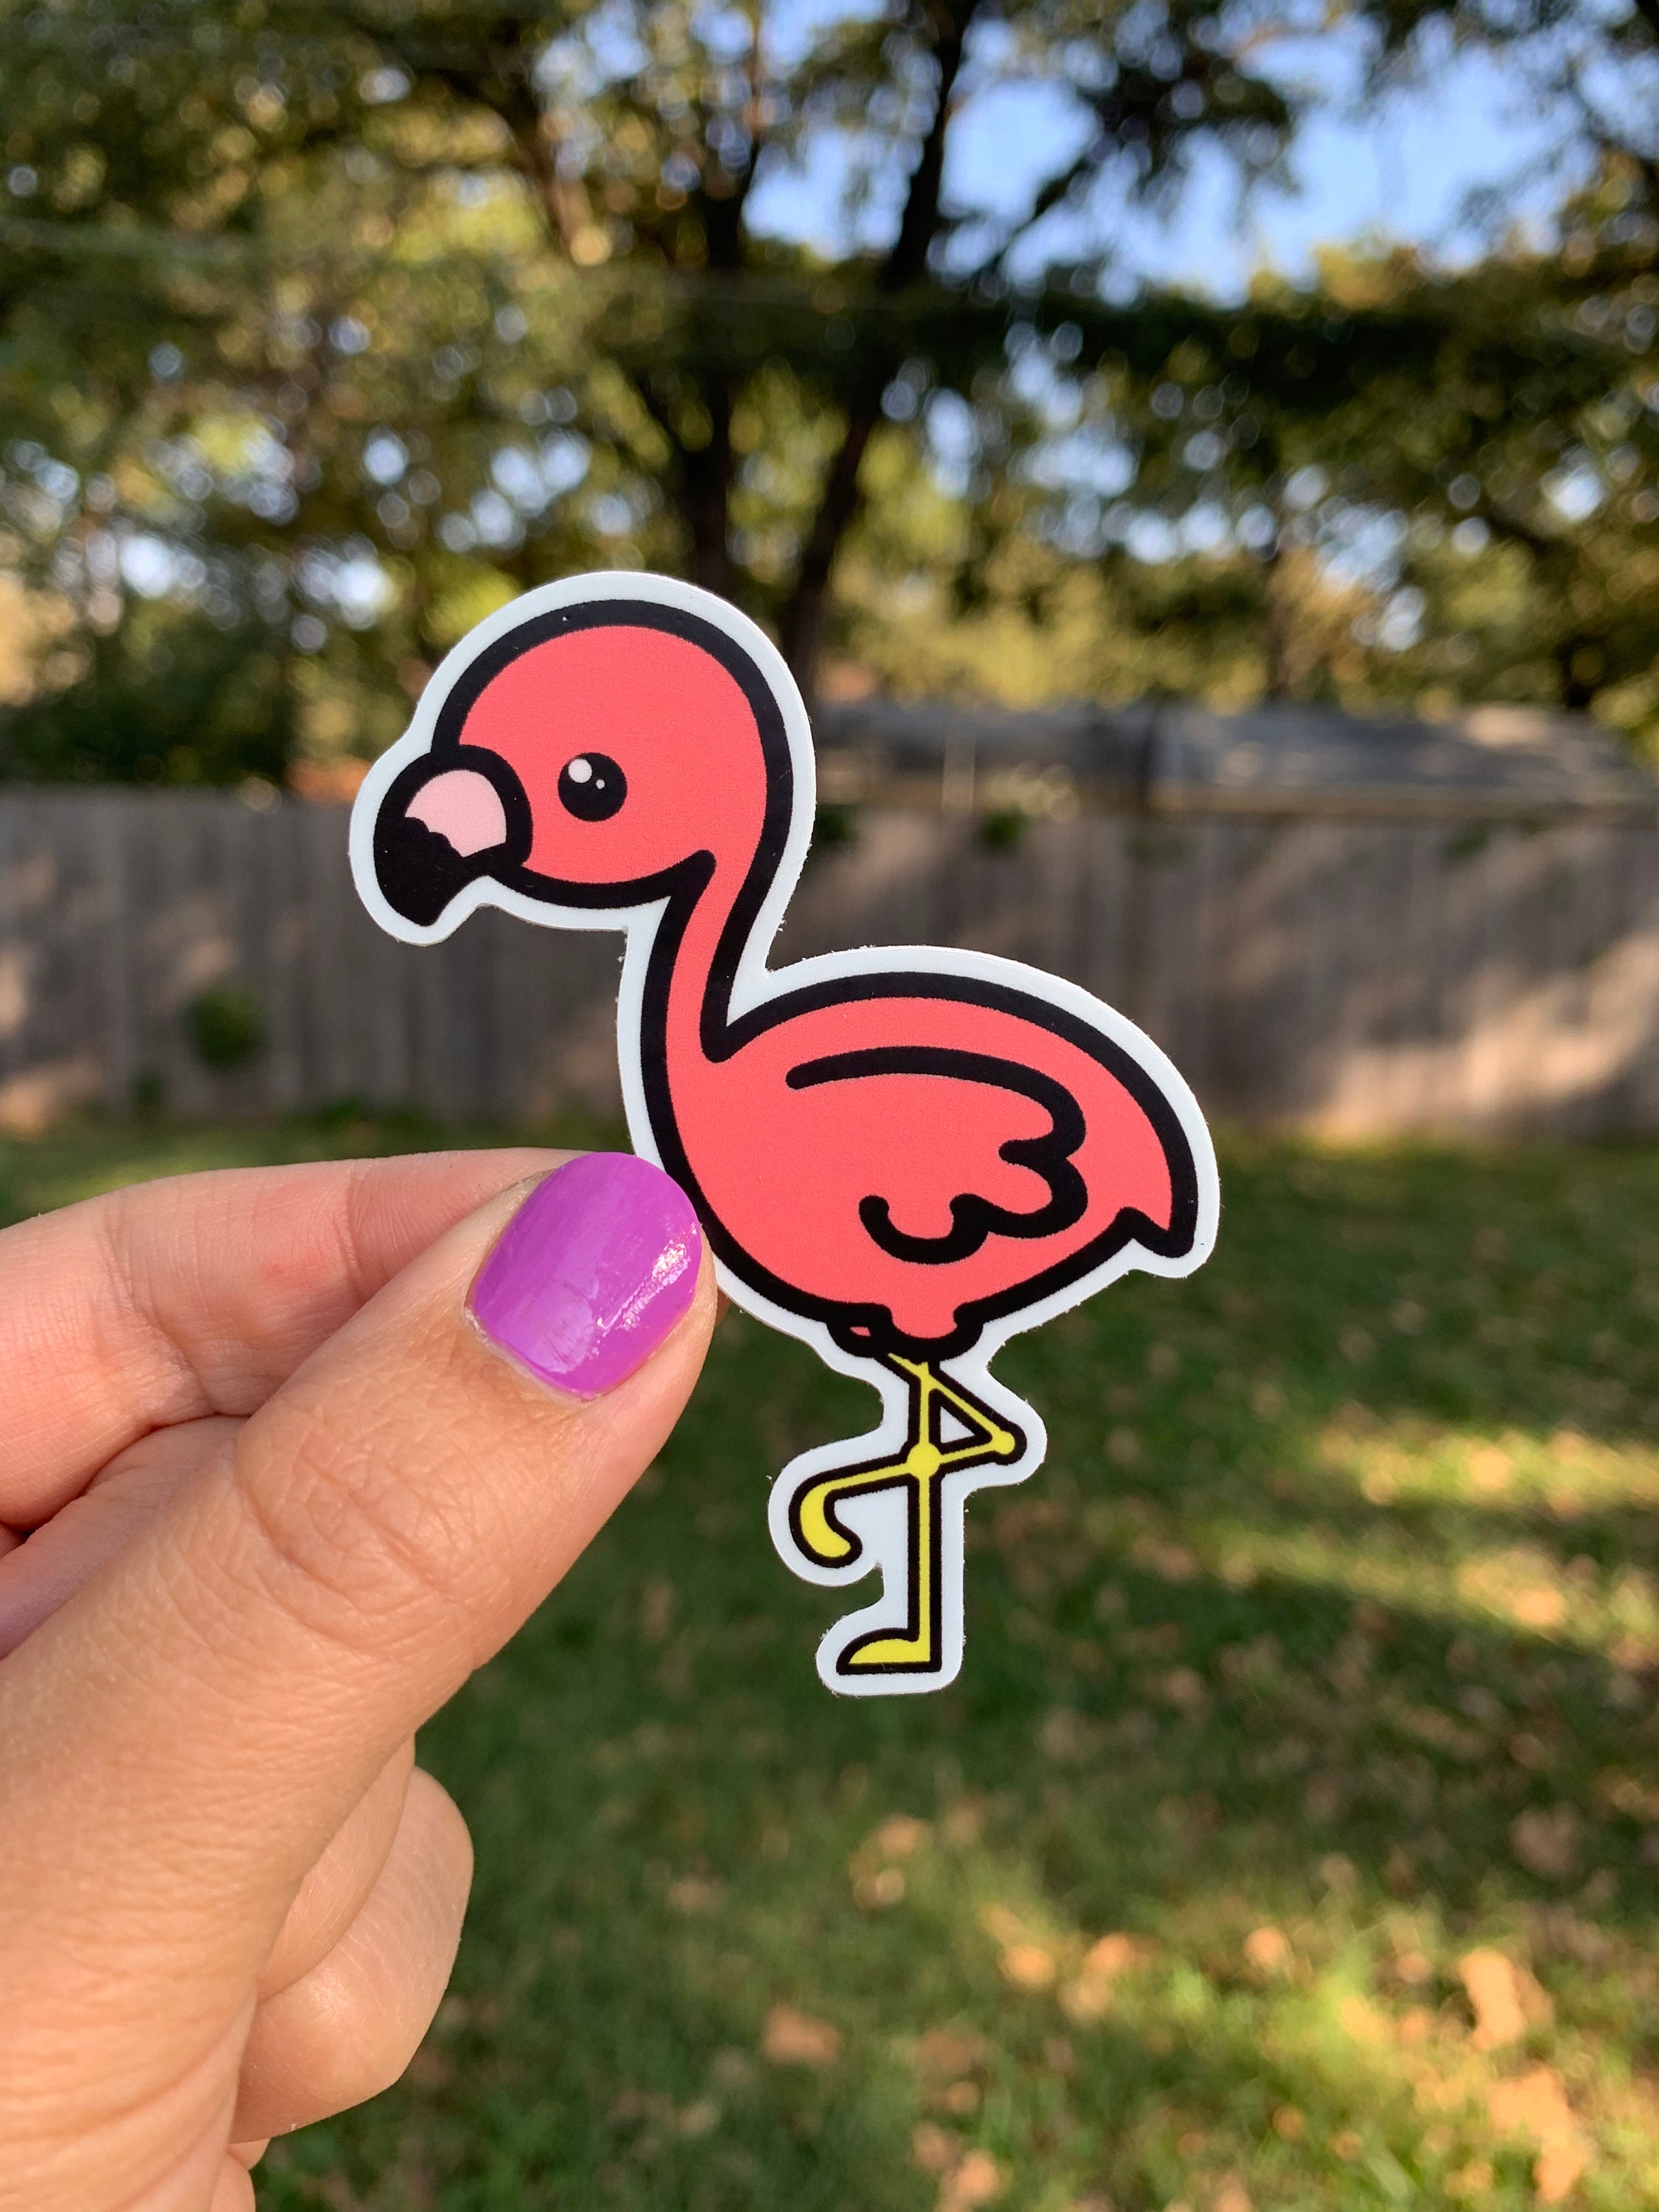 Flamingo -